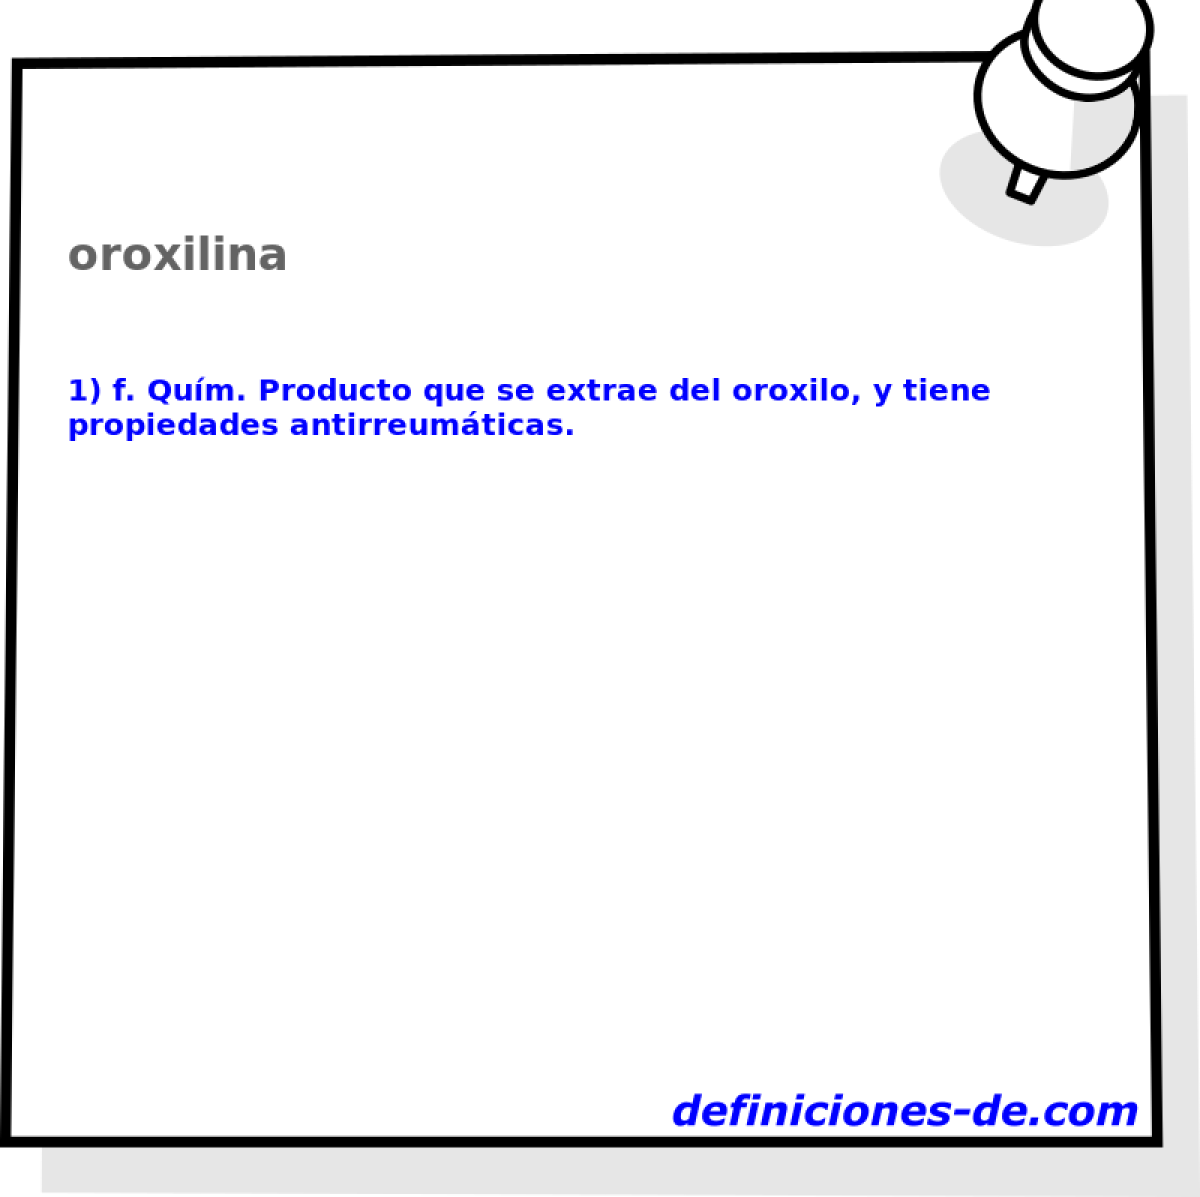 oroxilina 